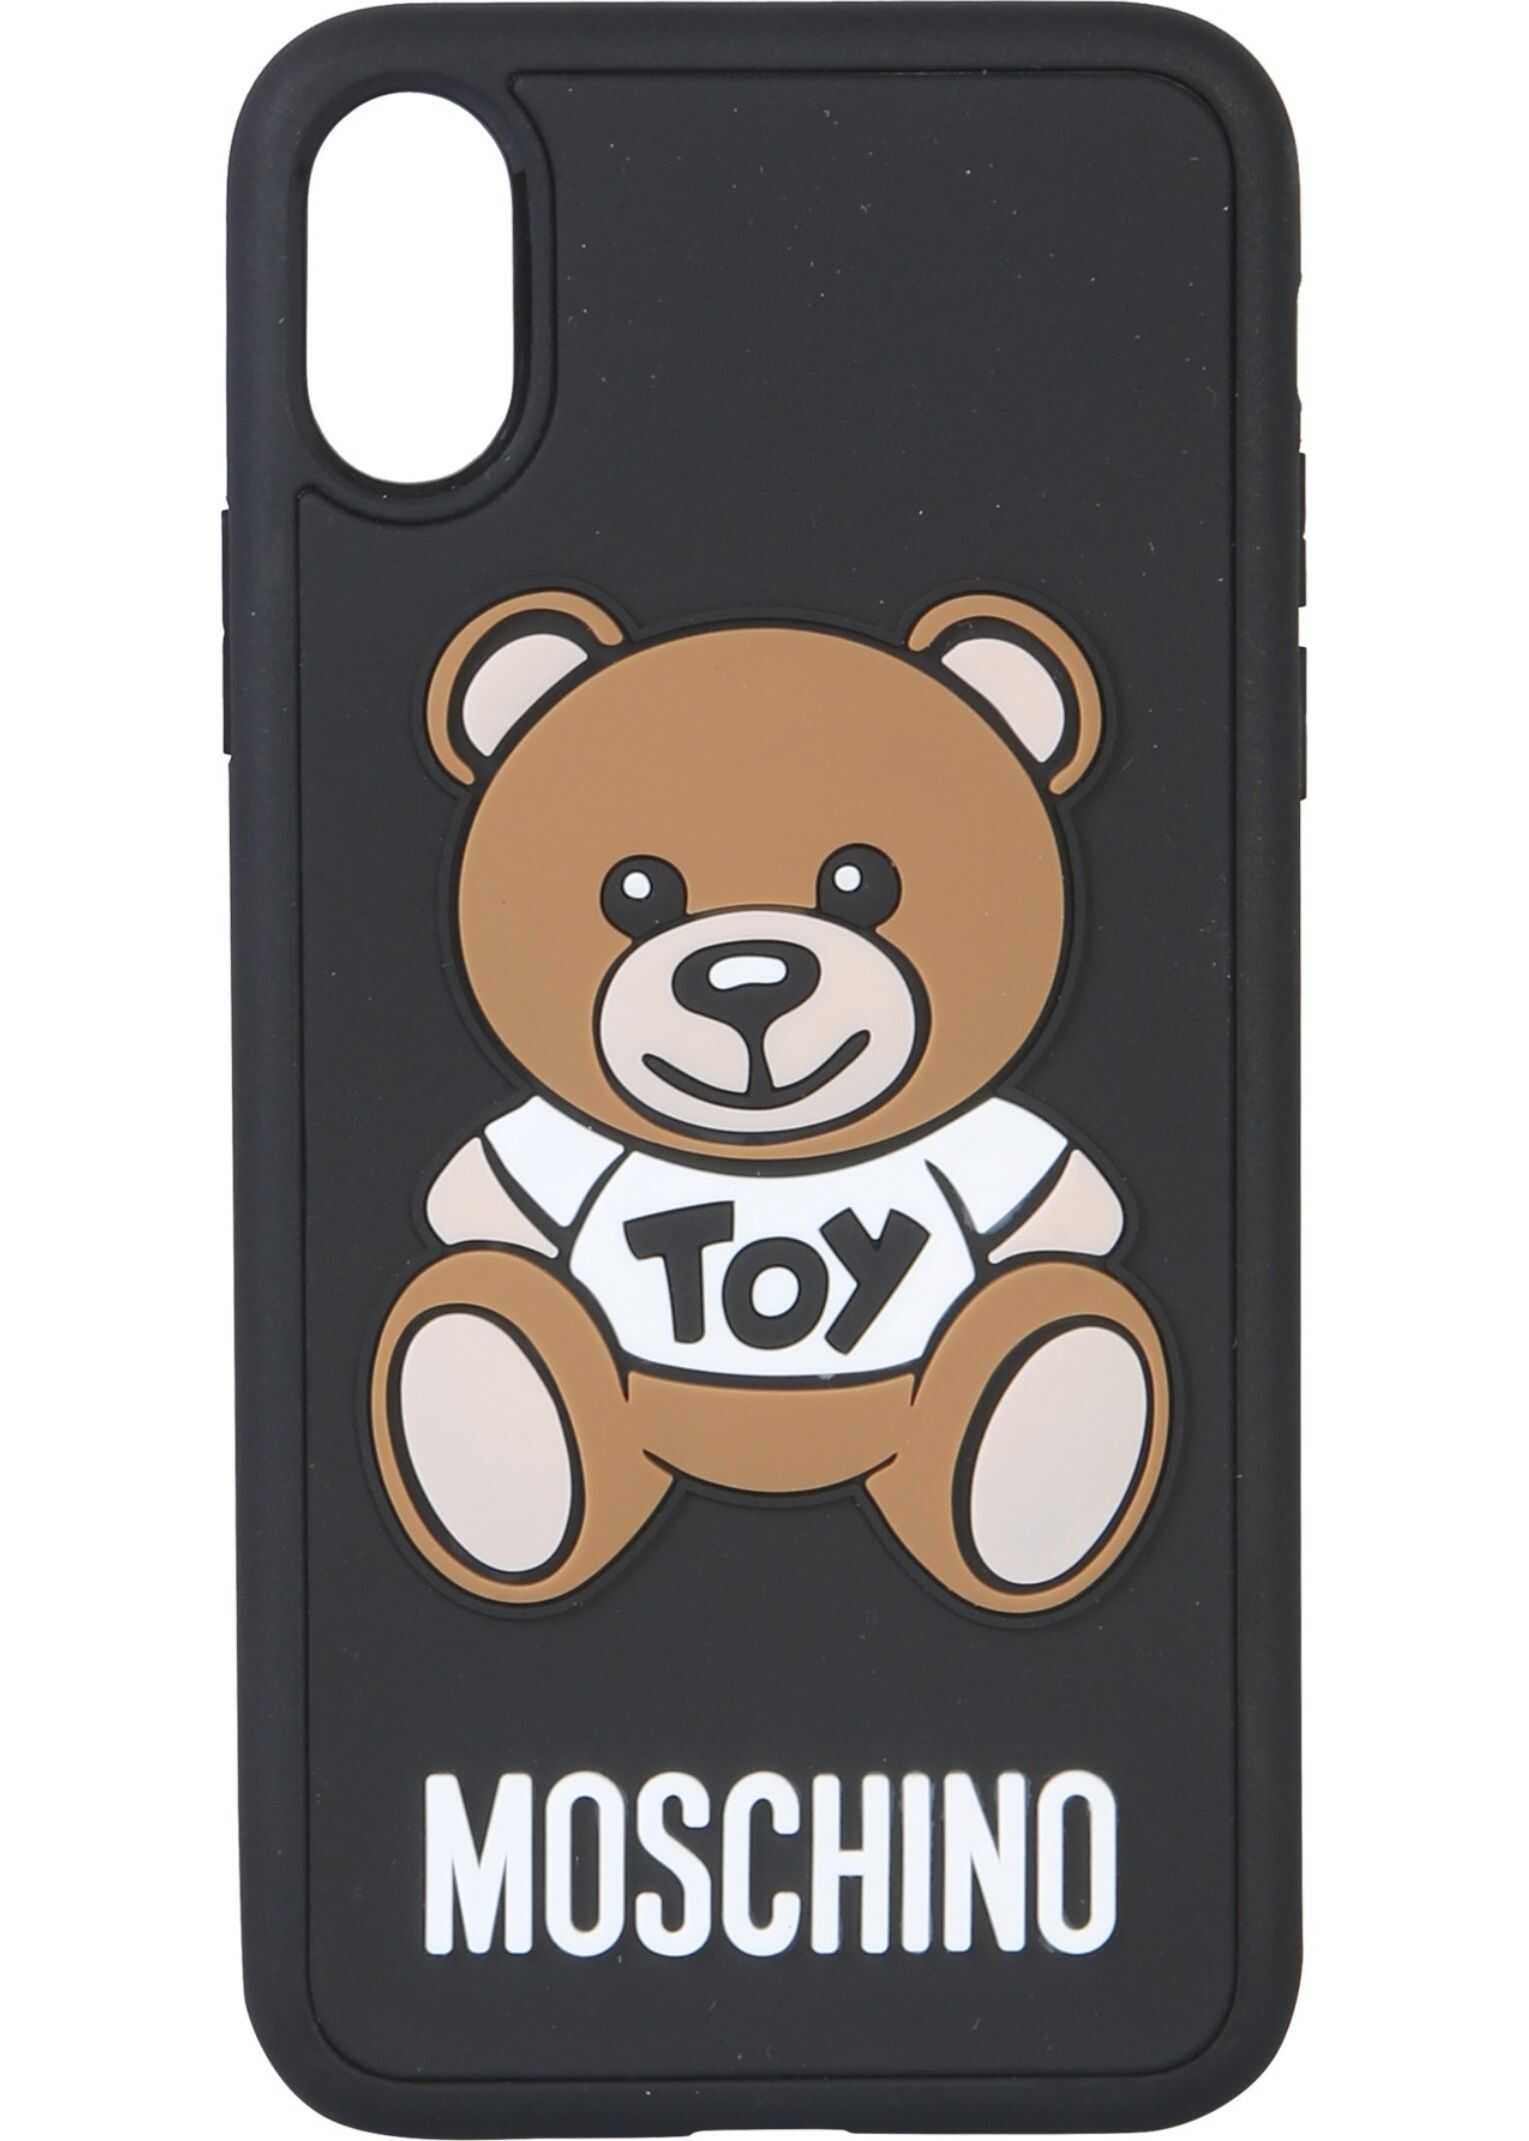 Moschino Iphone X Teddy Bear Cover BLACK